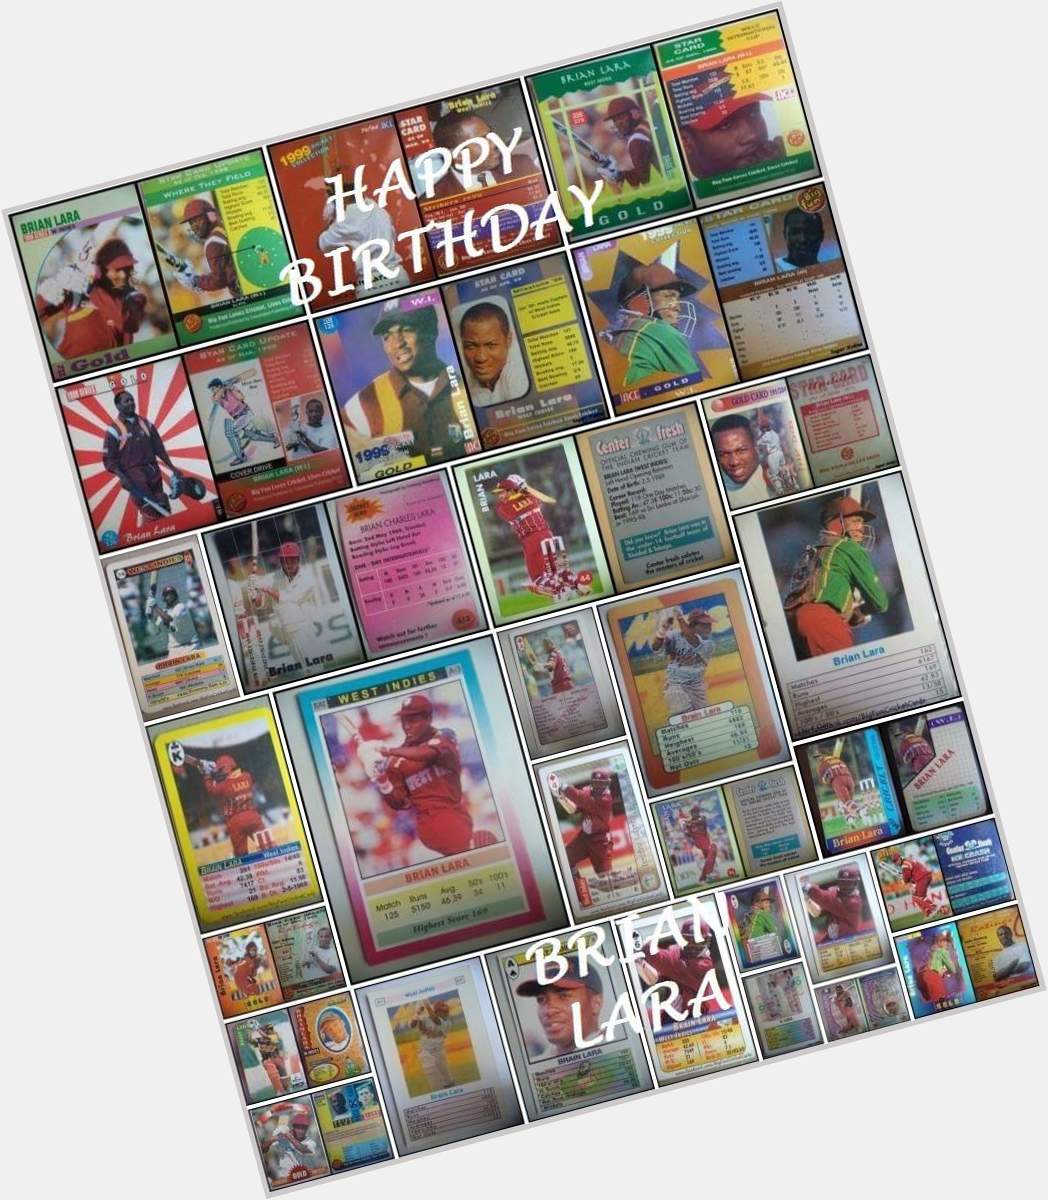 Happy Birthday Brian Lara    